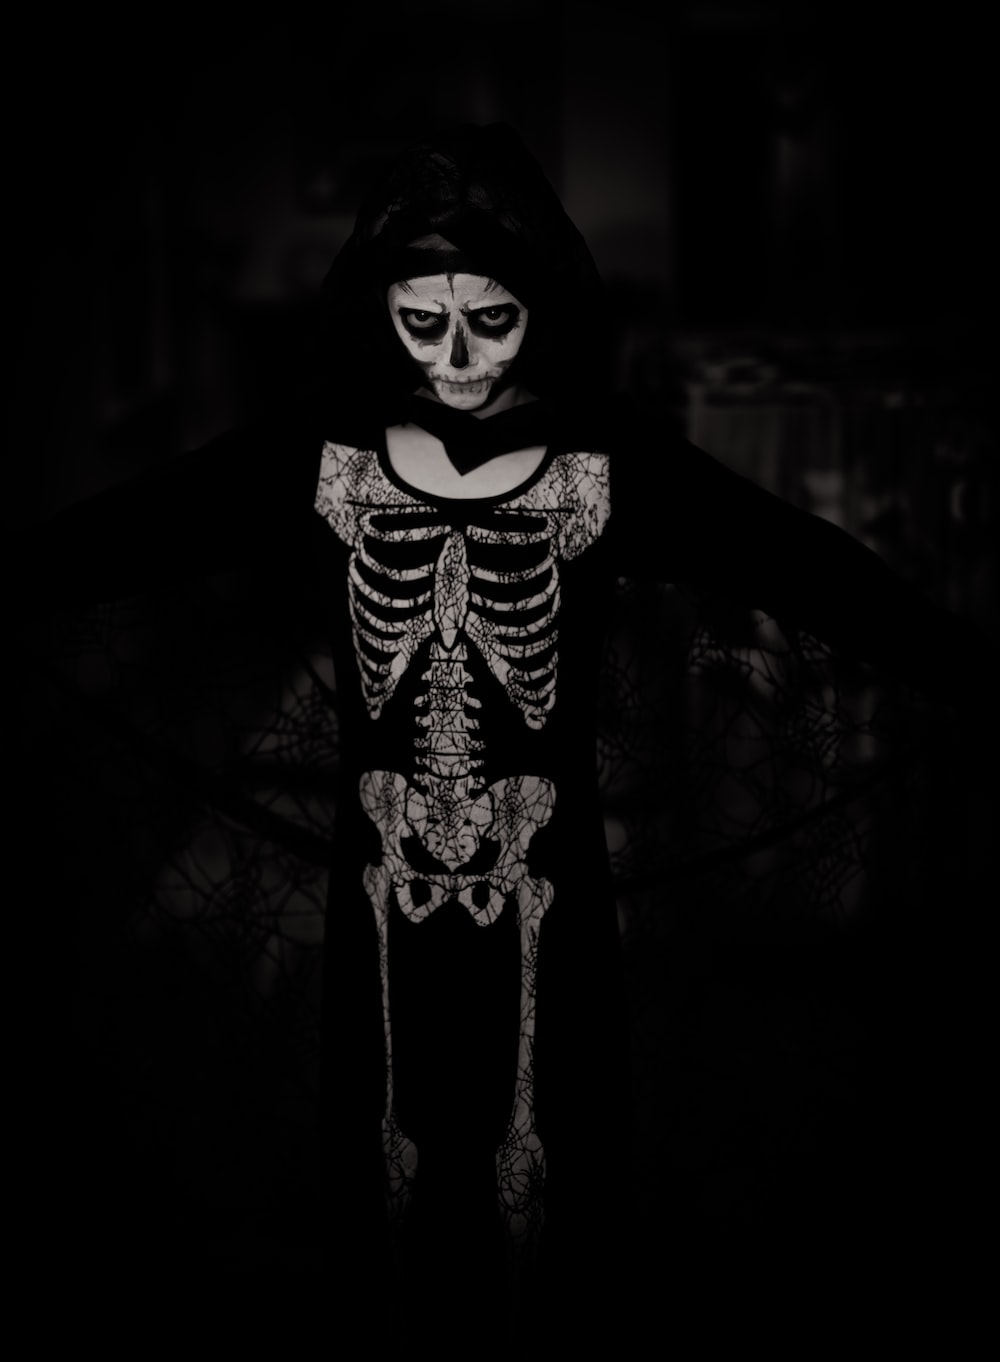 person wearing skeleton costume photo